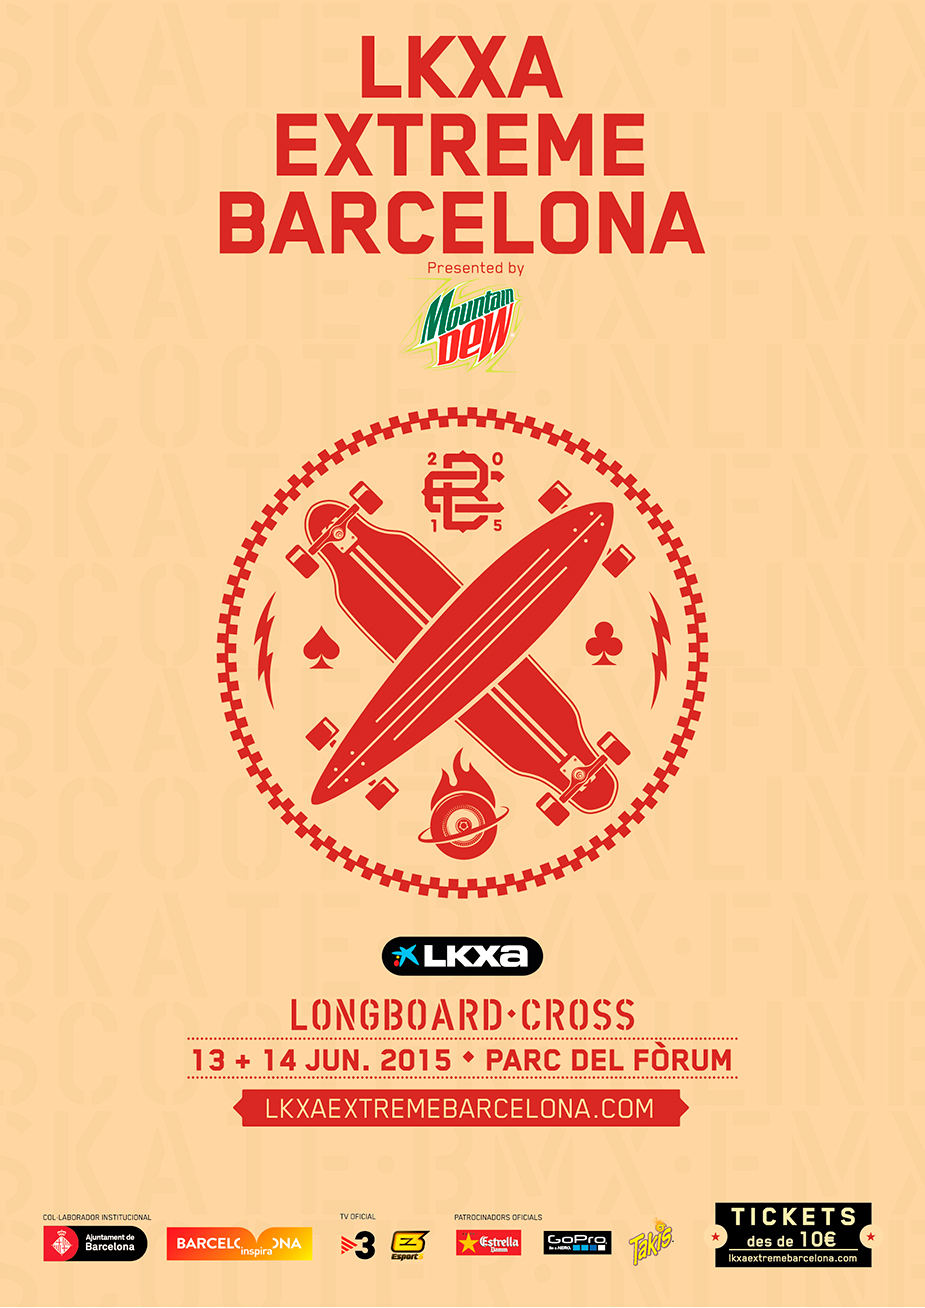 LKXA Extreme Barcelona Longboard Cross